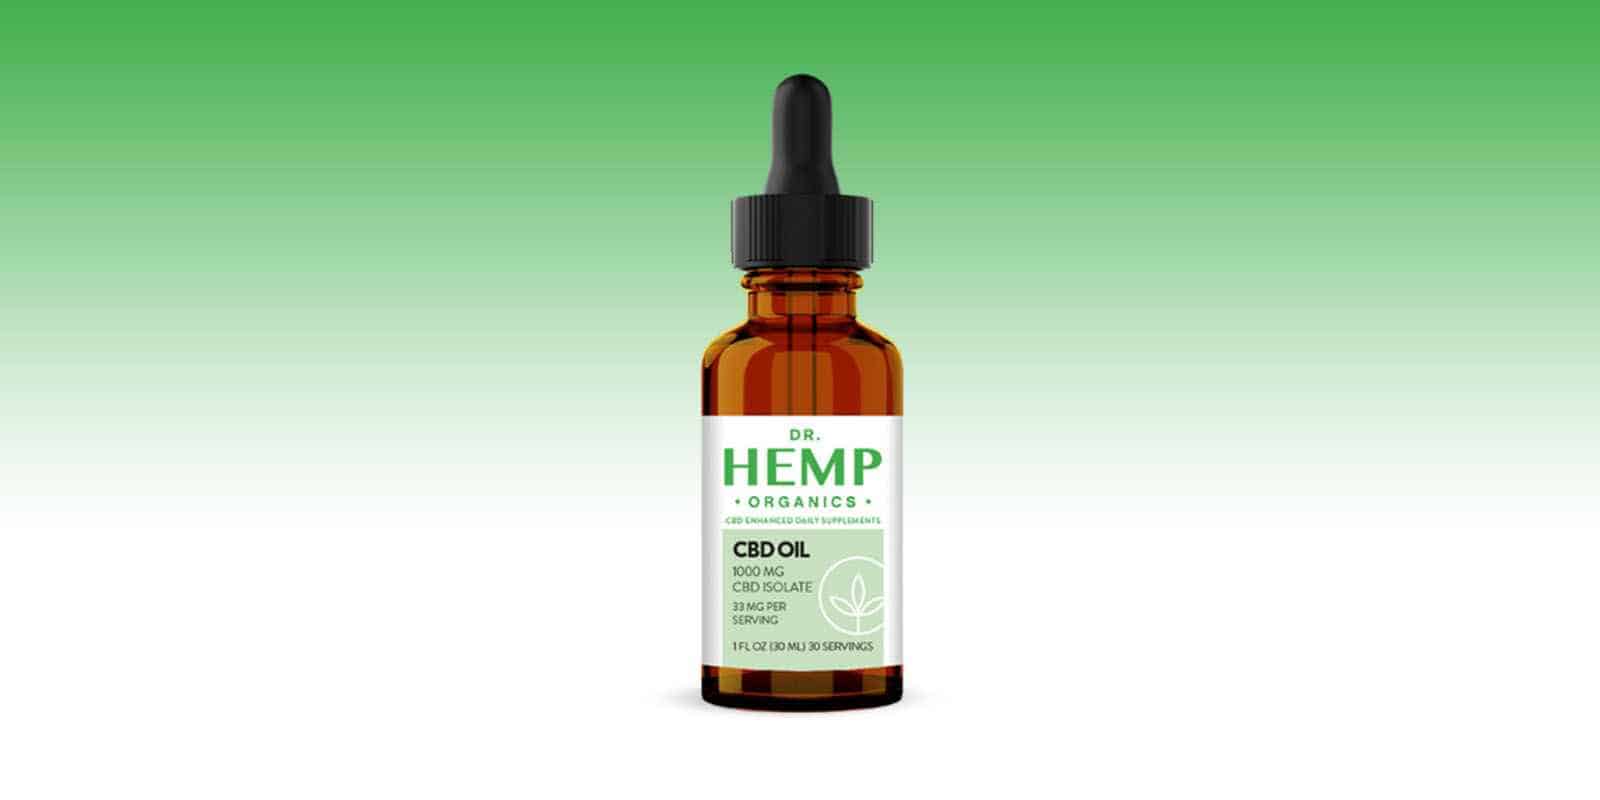 Dr. Hemp Organics CBD Oil Reviews